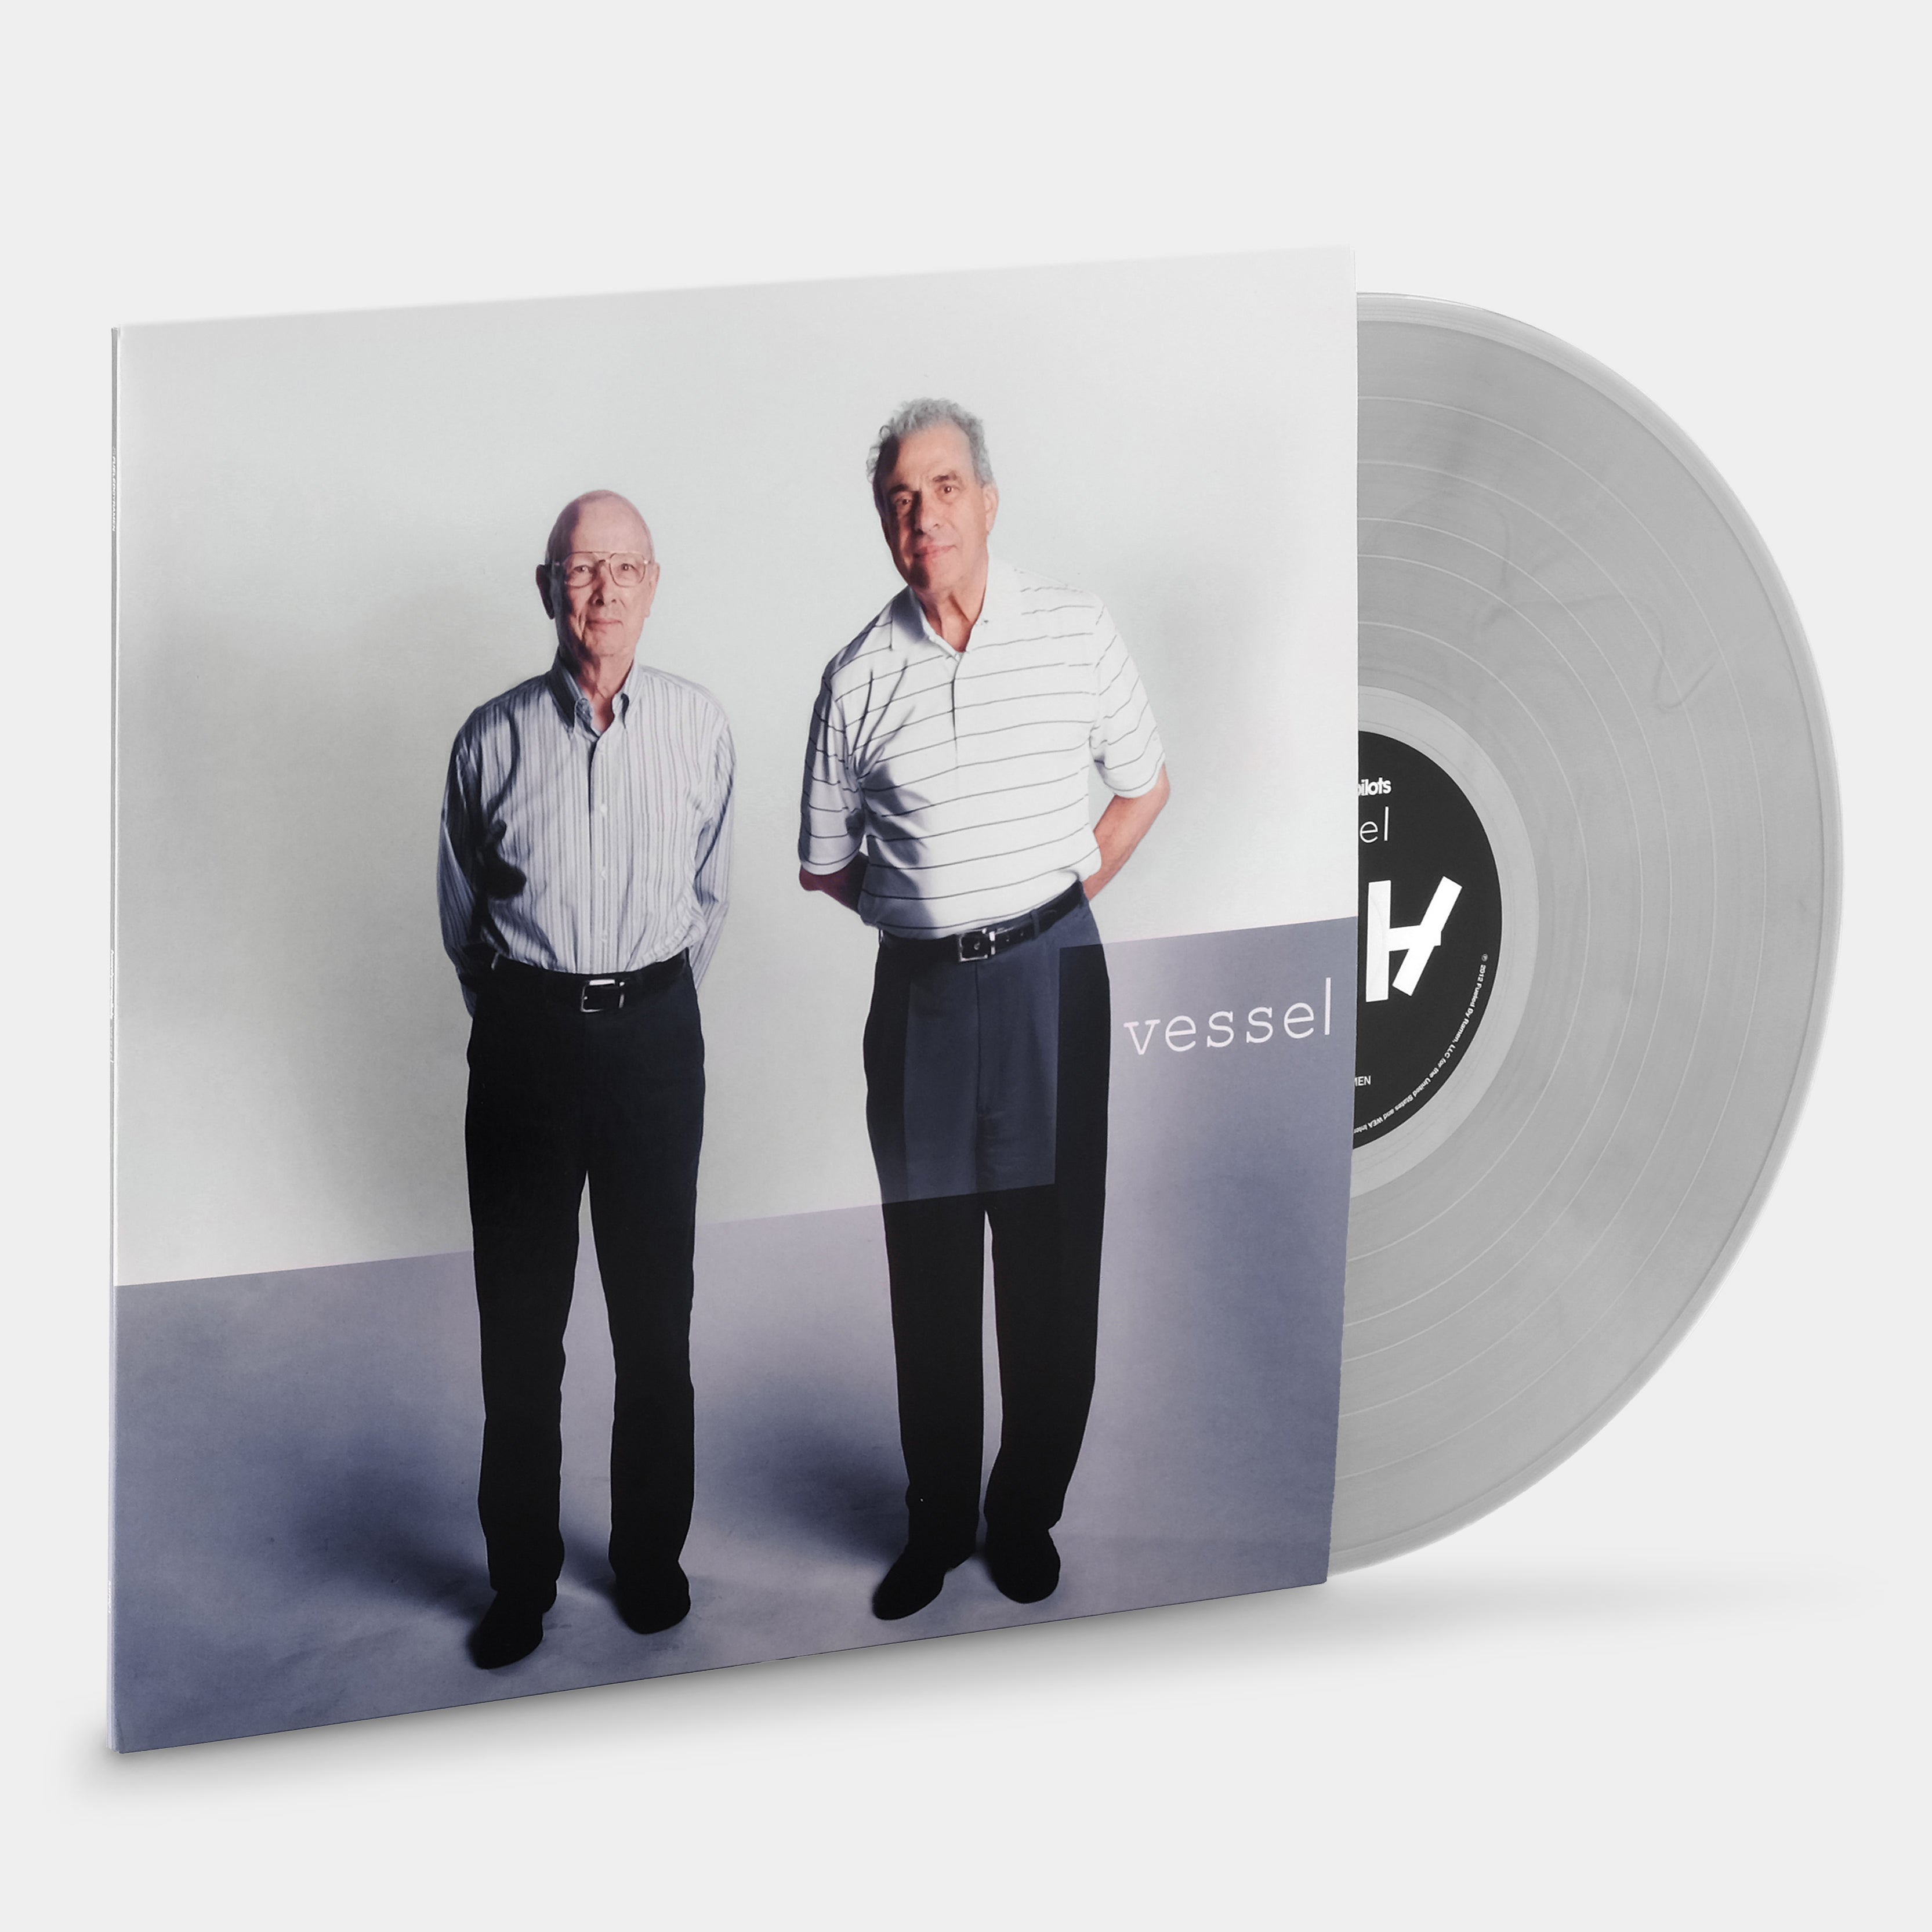 Twenty One Pilots - Vessel LP Silver Vinyl Record